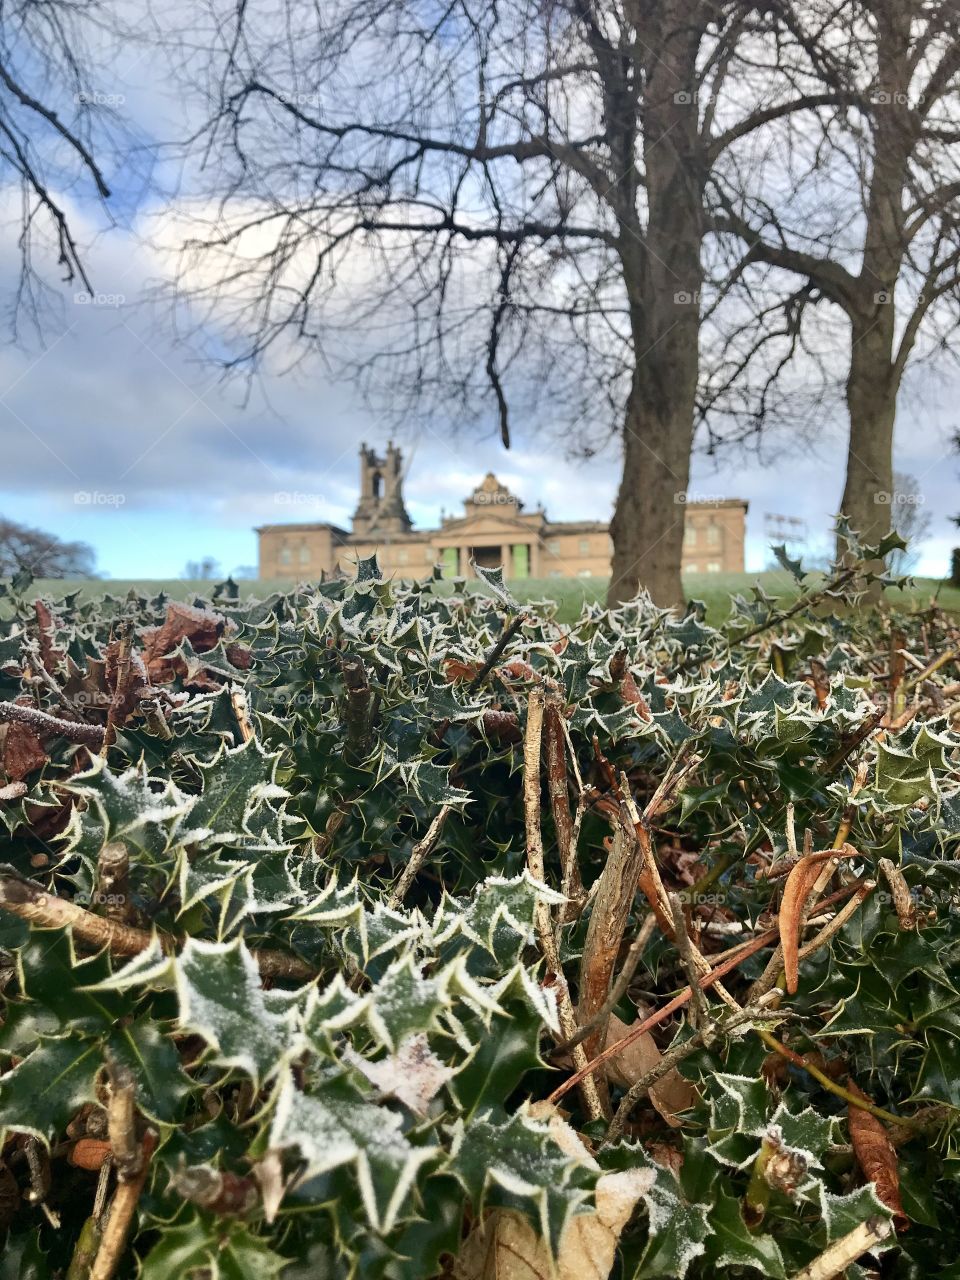 Frosty hedges at the Scottish Gallery of Modern Art, Edinburgh, Scotland